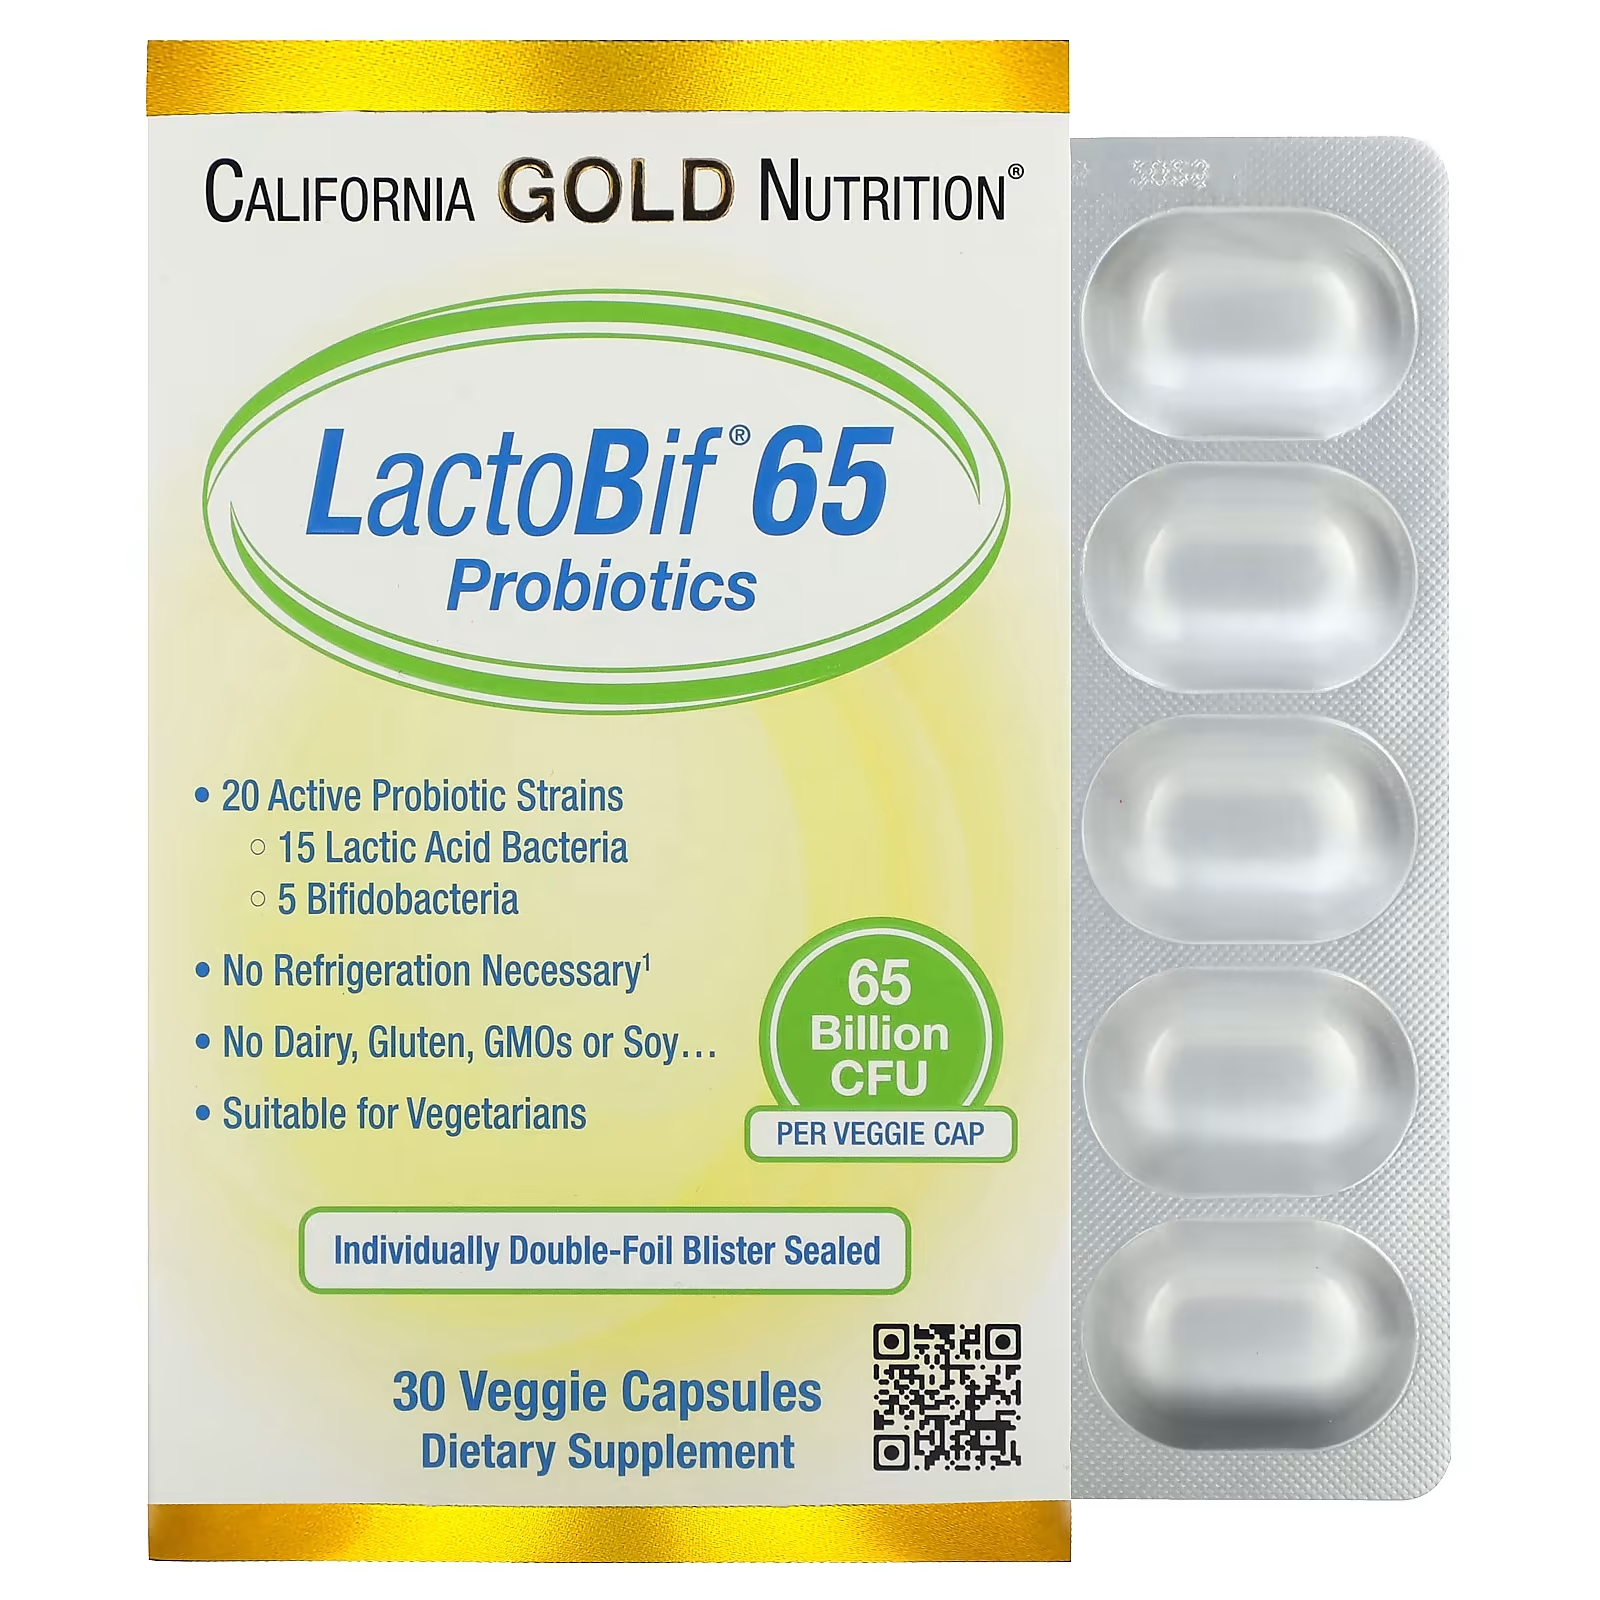 California Gold Nutrition LactoBif 65 Пробиотики 65 миллиардов КОЕ 30 растительных капсул california gold nutrition cranmax lactobif пробиотики 25 миллиардов кое 30 растительных капсул